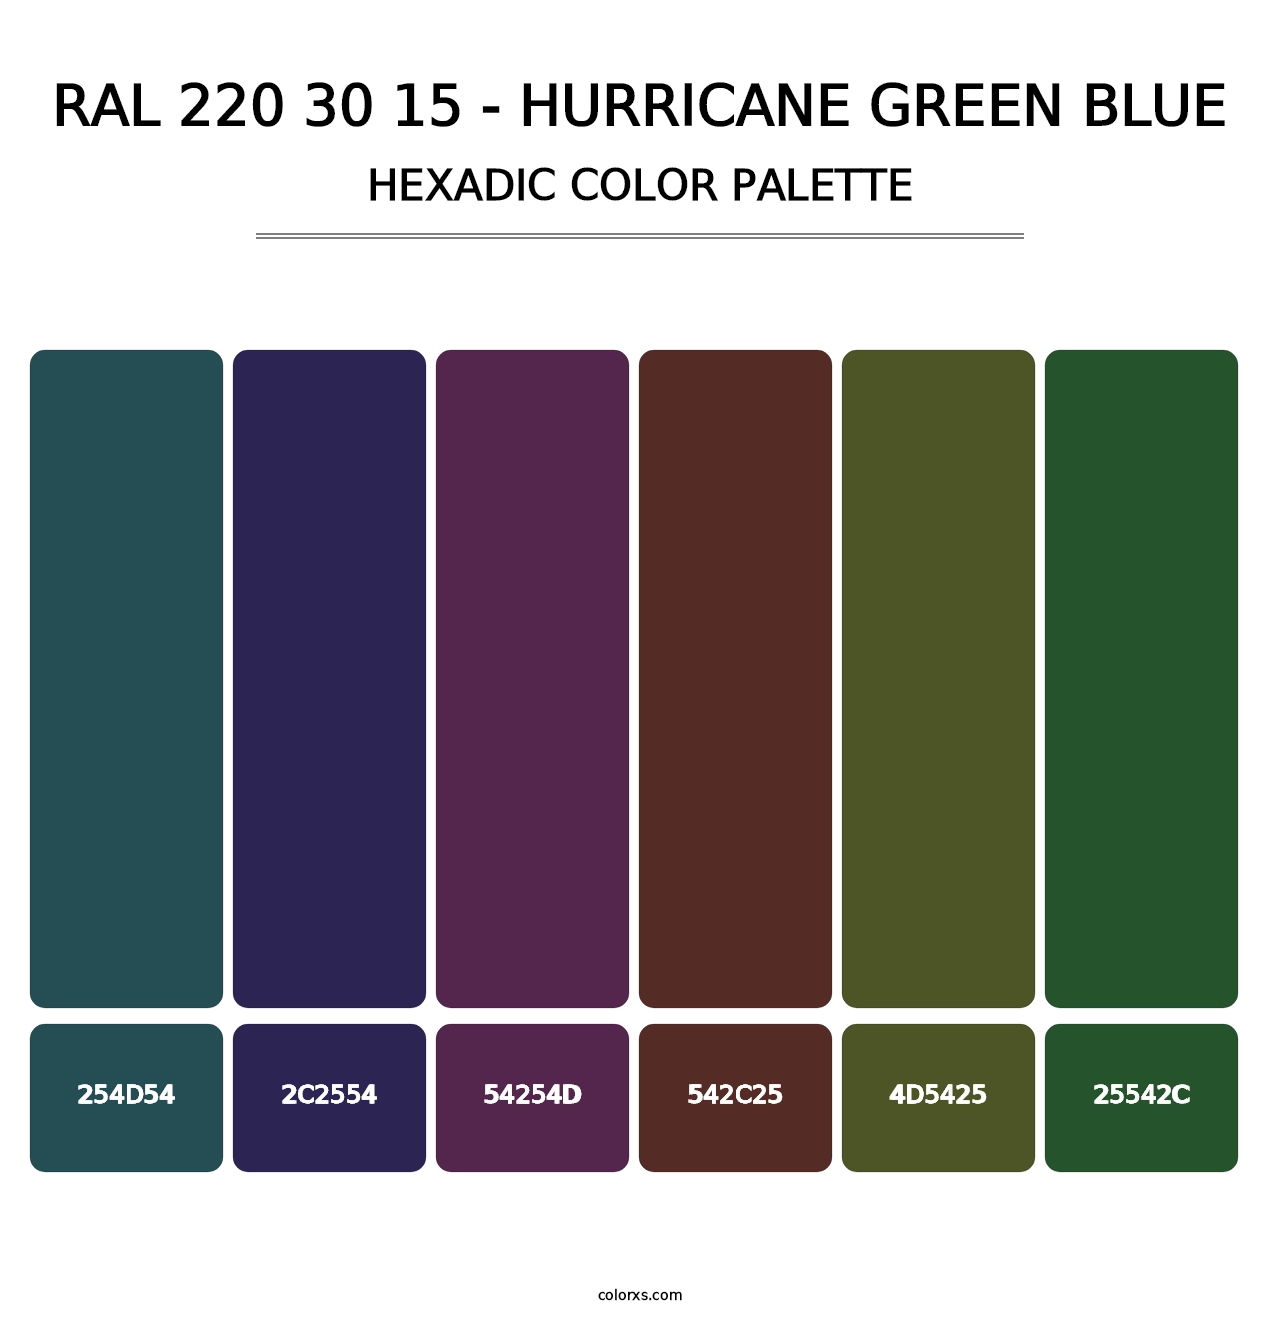 RAL 220 30 15 - Hurricane Green Blue - Hexadic Color Palette